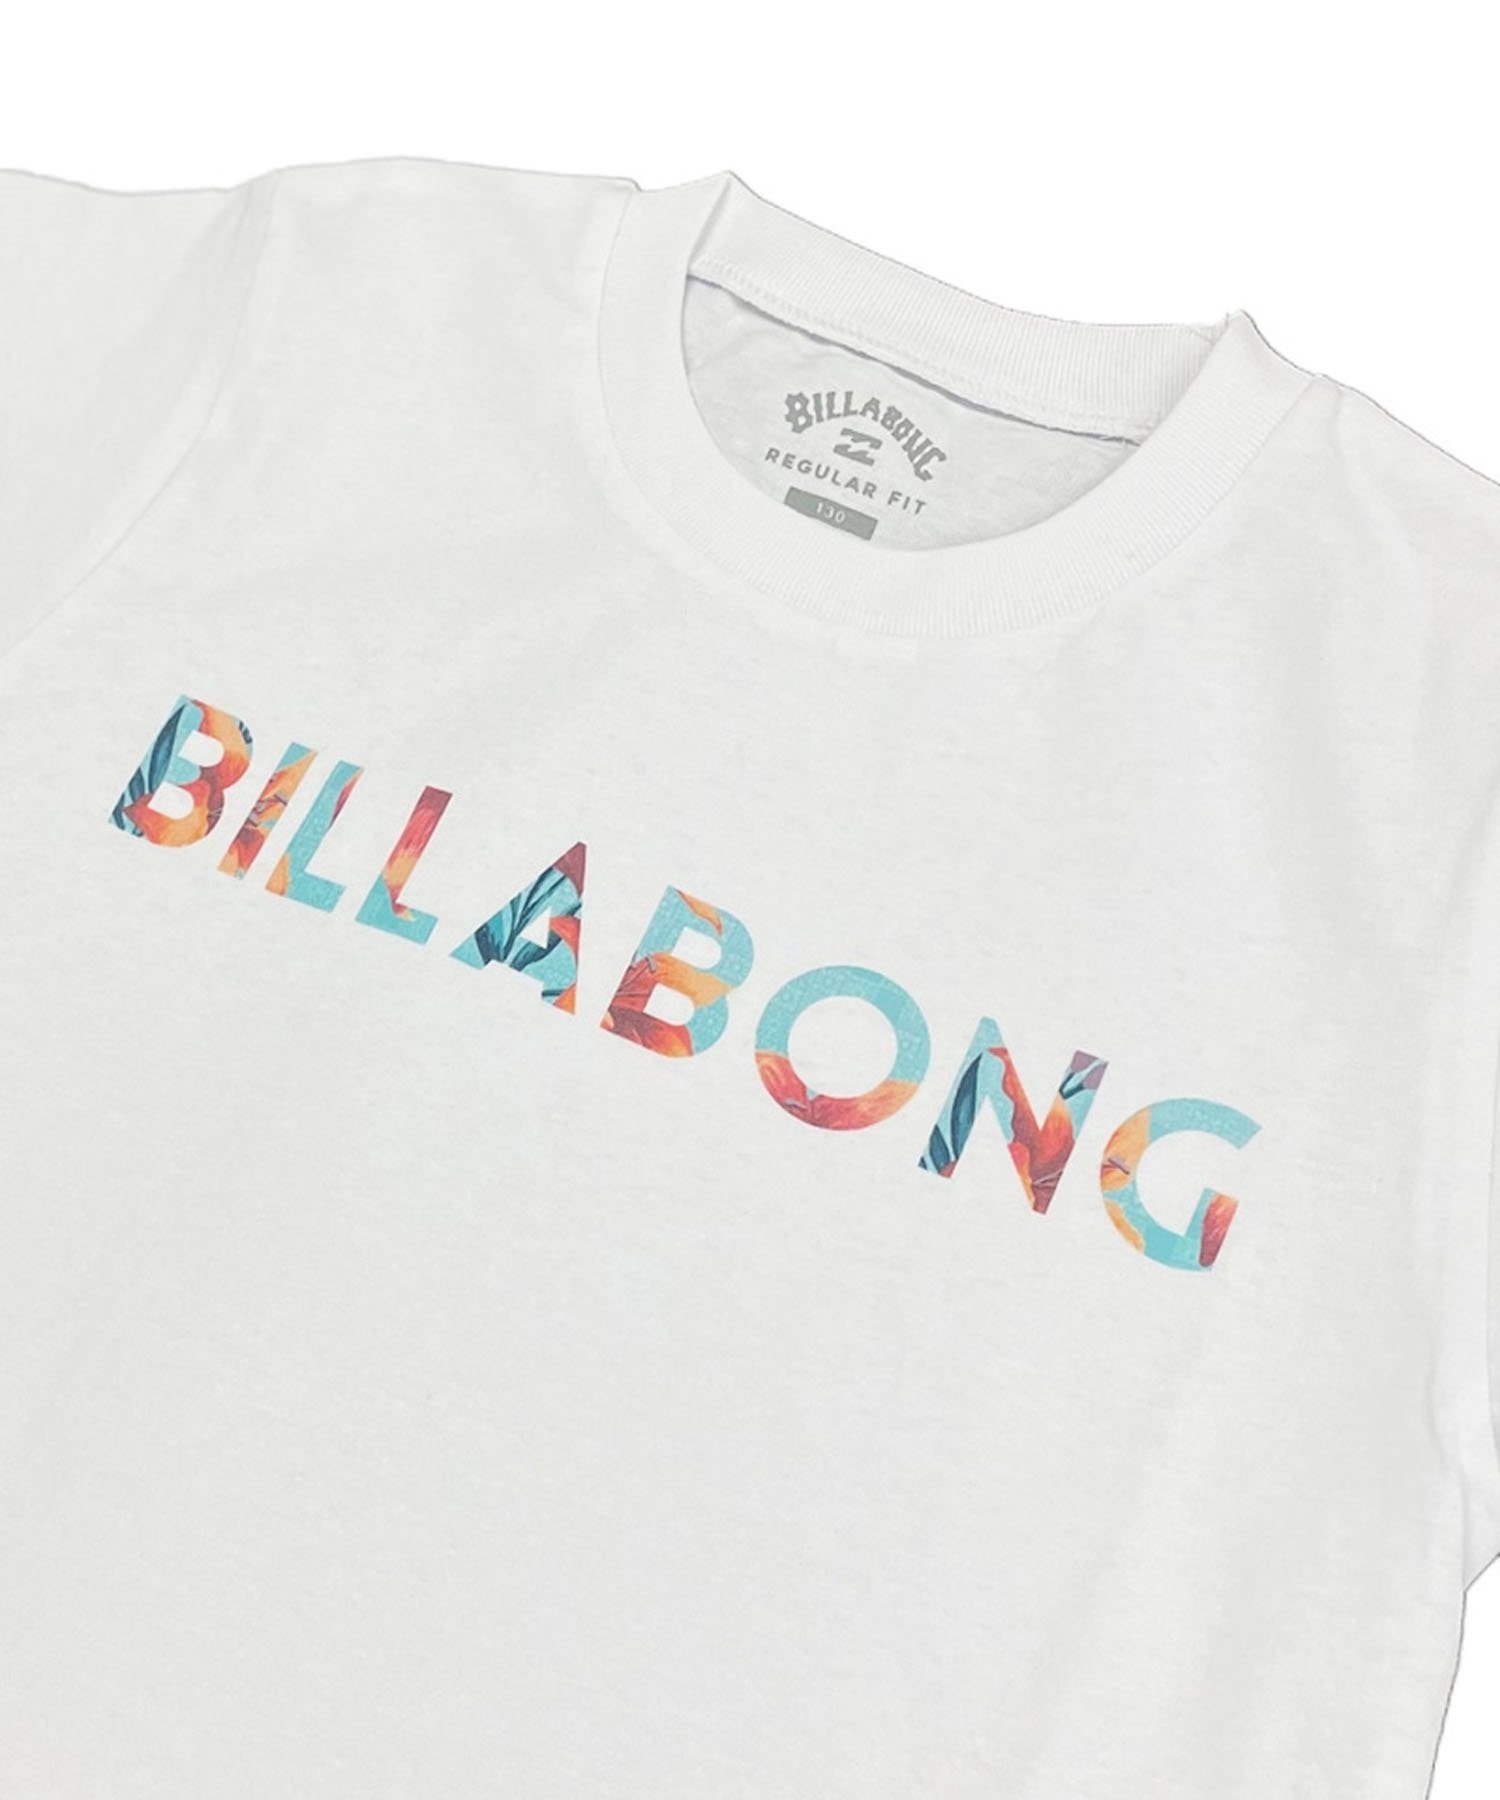 BILLABONG ビラボン UNITY LOGO キッズ 半袖 Tシャツ BE015-204(WBK-90cm)